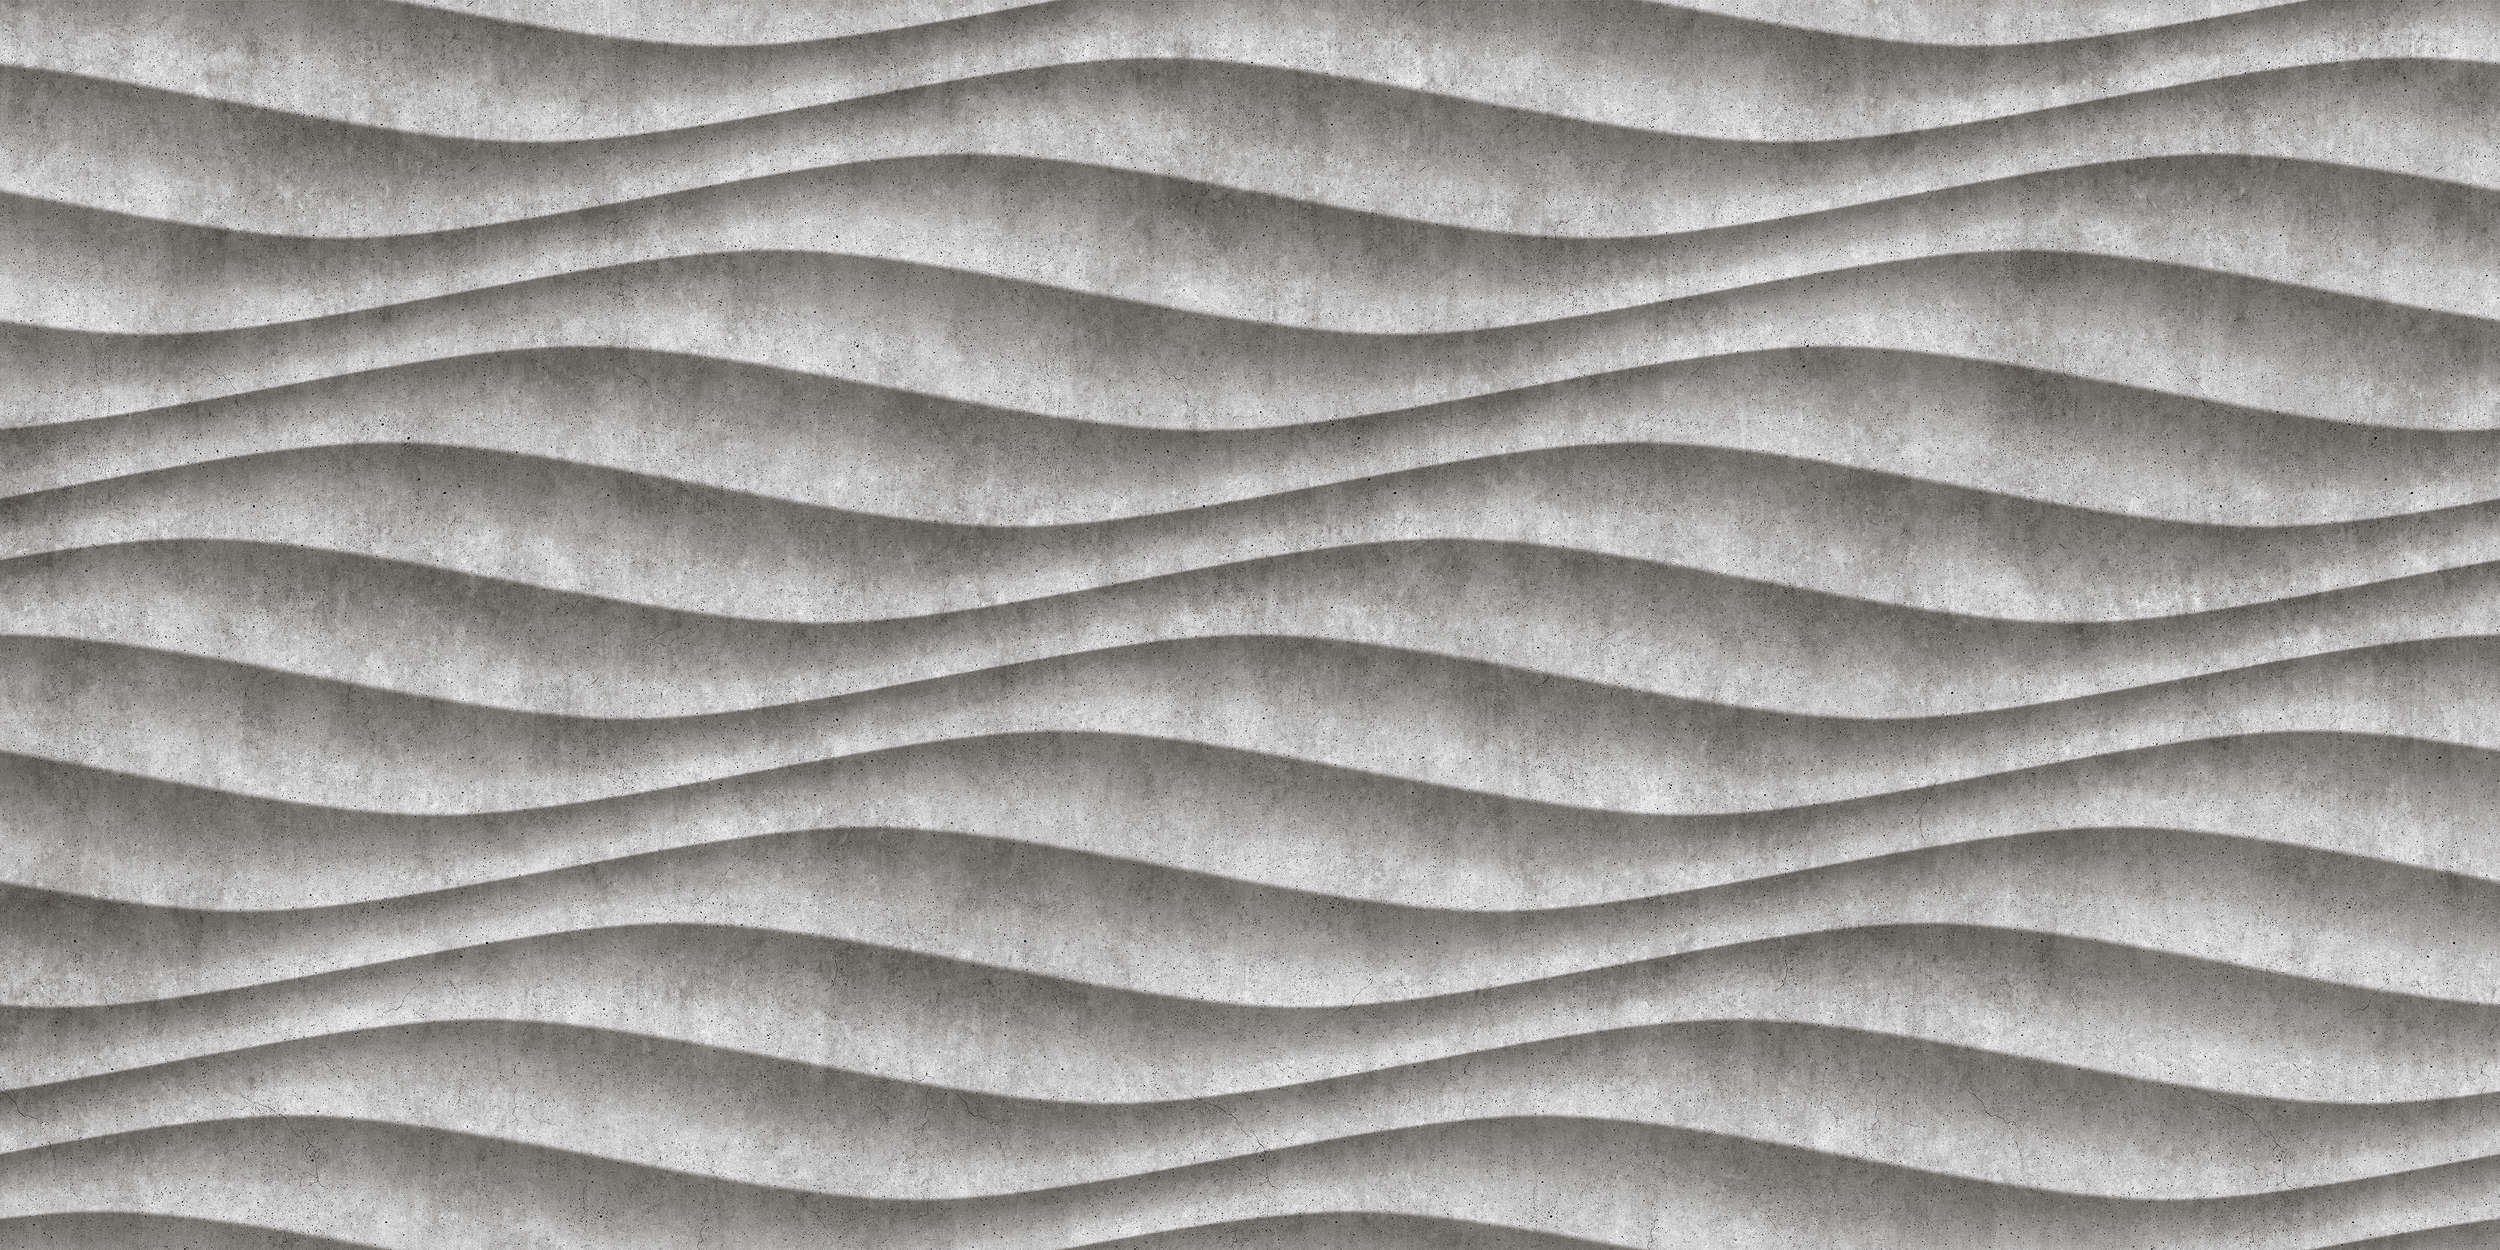             Canyon 2 - Cool 3D Concrete Waves Wallpaper - Grey, Black | Pearl Smooth Non-woven
        